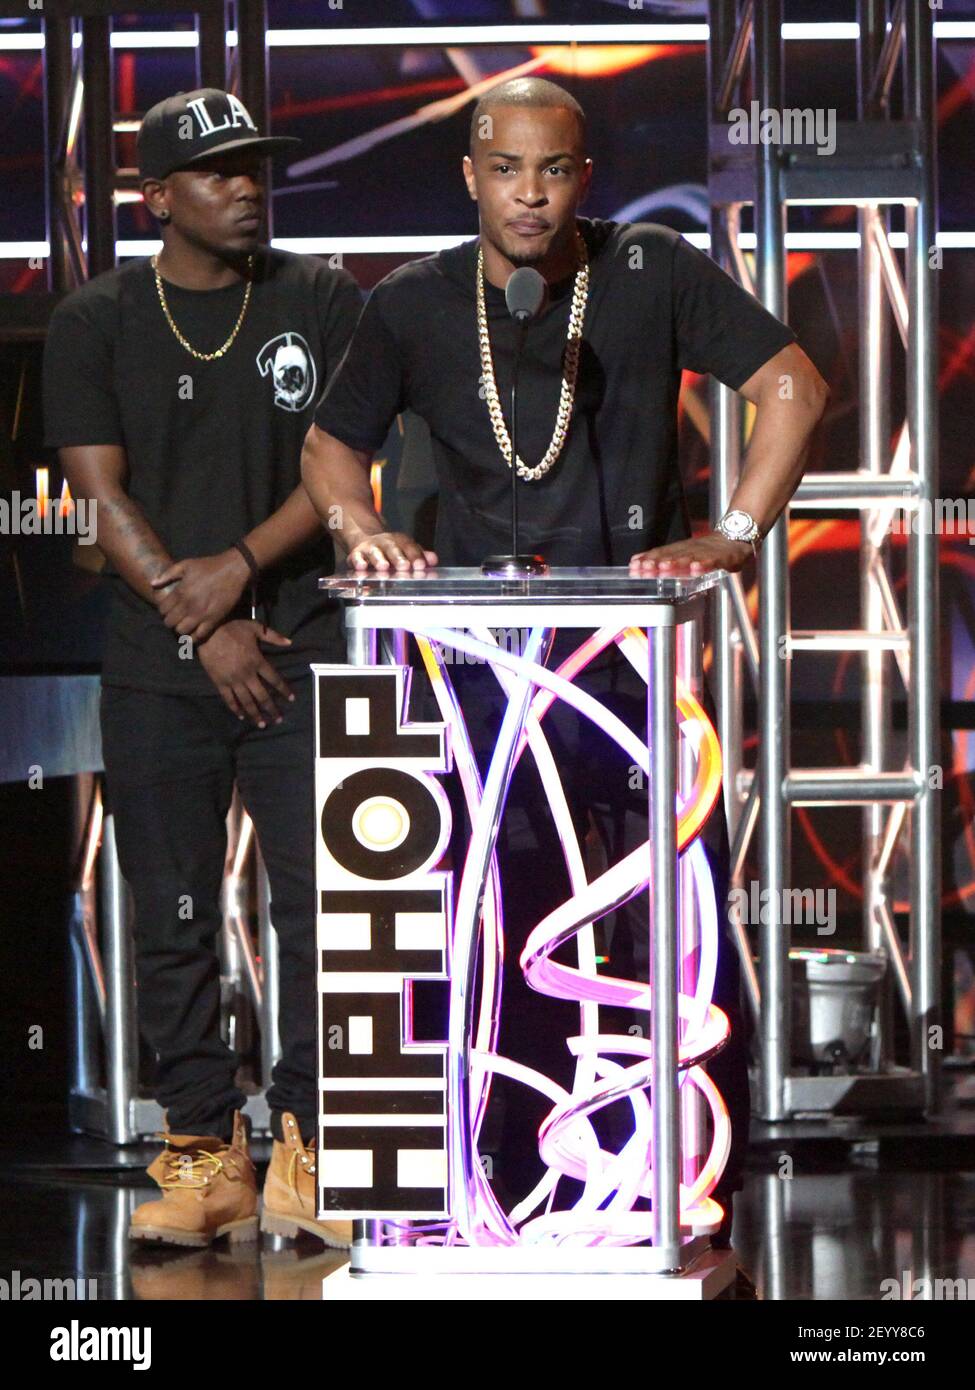 BET Hip Hop Awards: Full Winners List: Kendrick Lamar Wins Six Awards –  Billboard